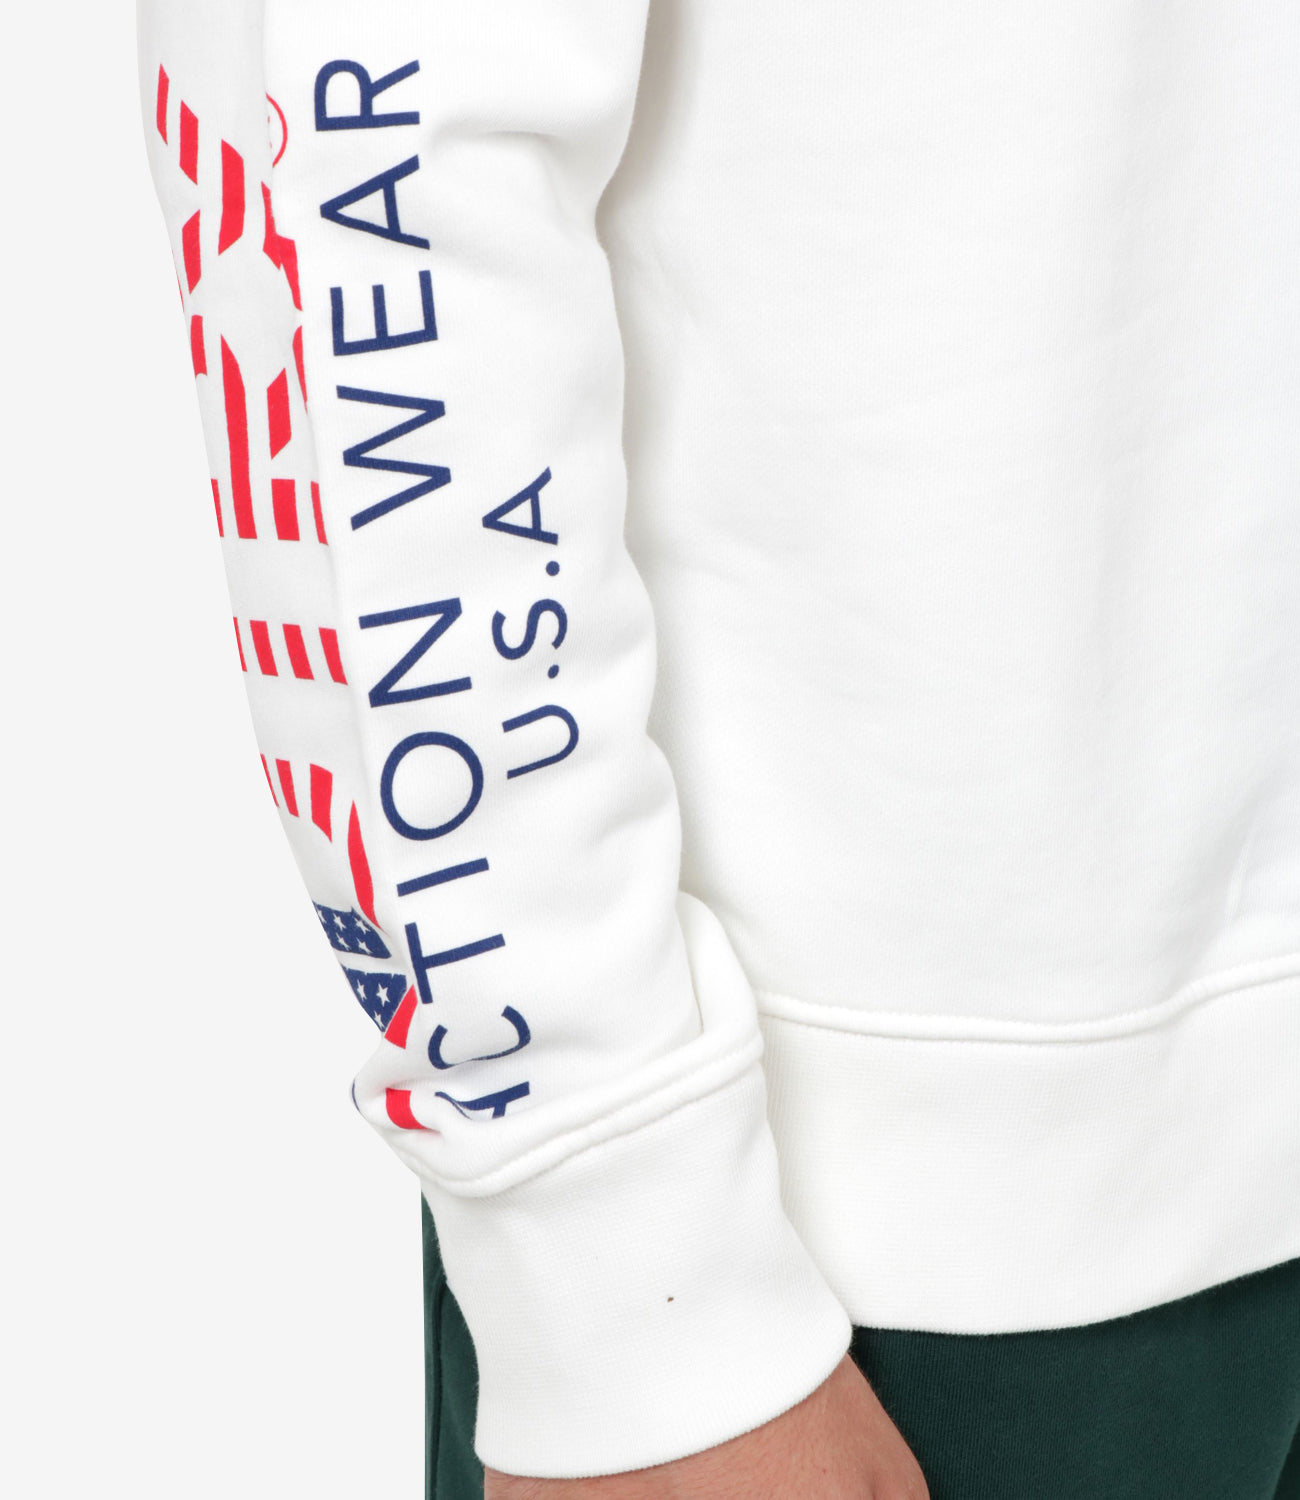 Autry | Iconic Flag Sweatshirt White